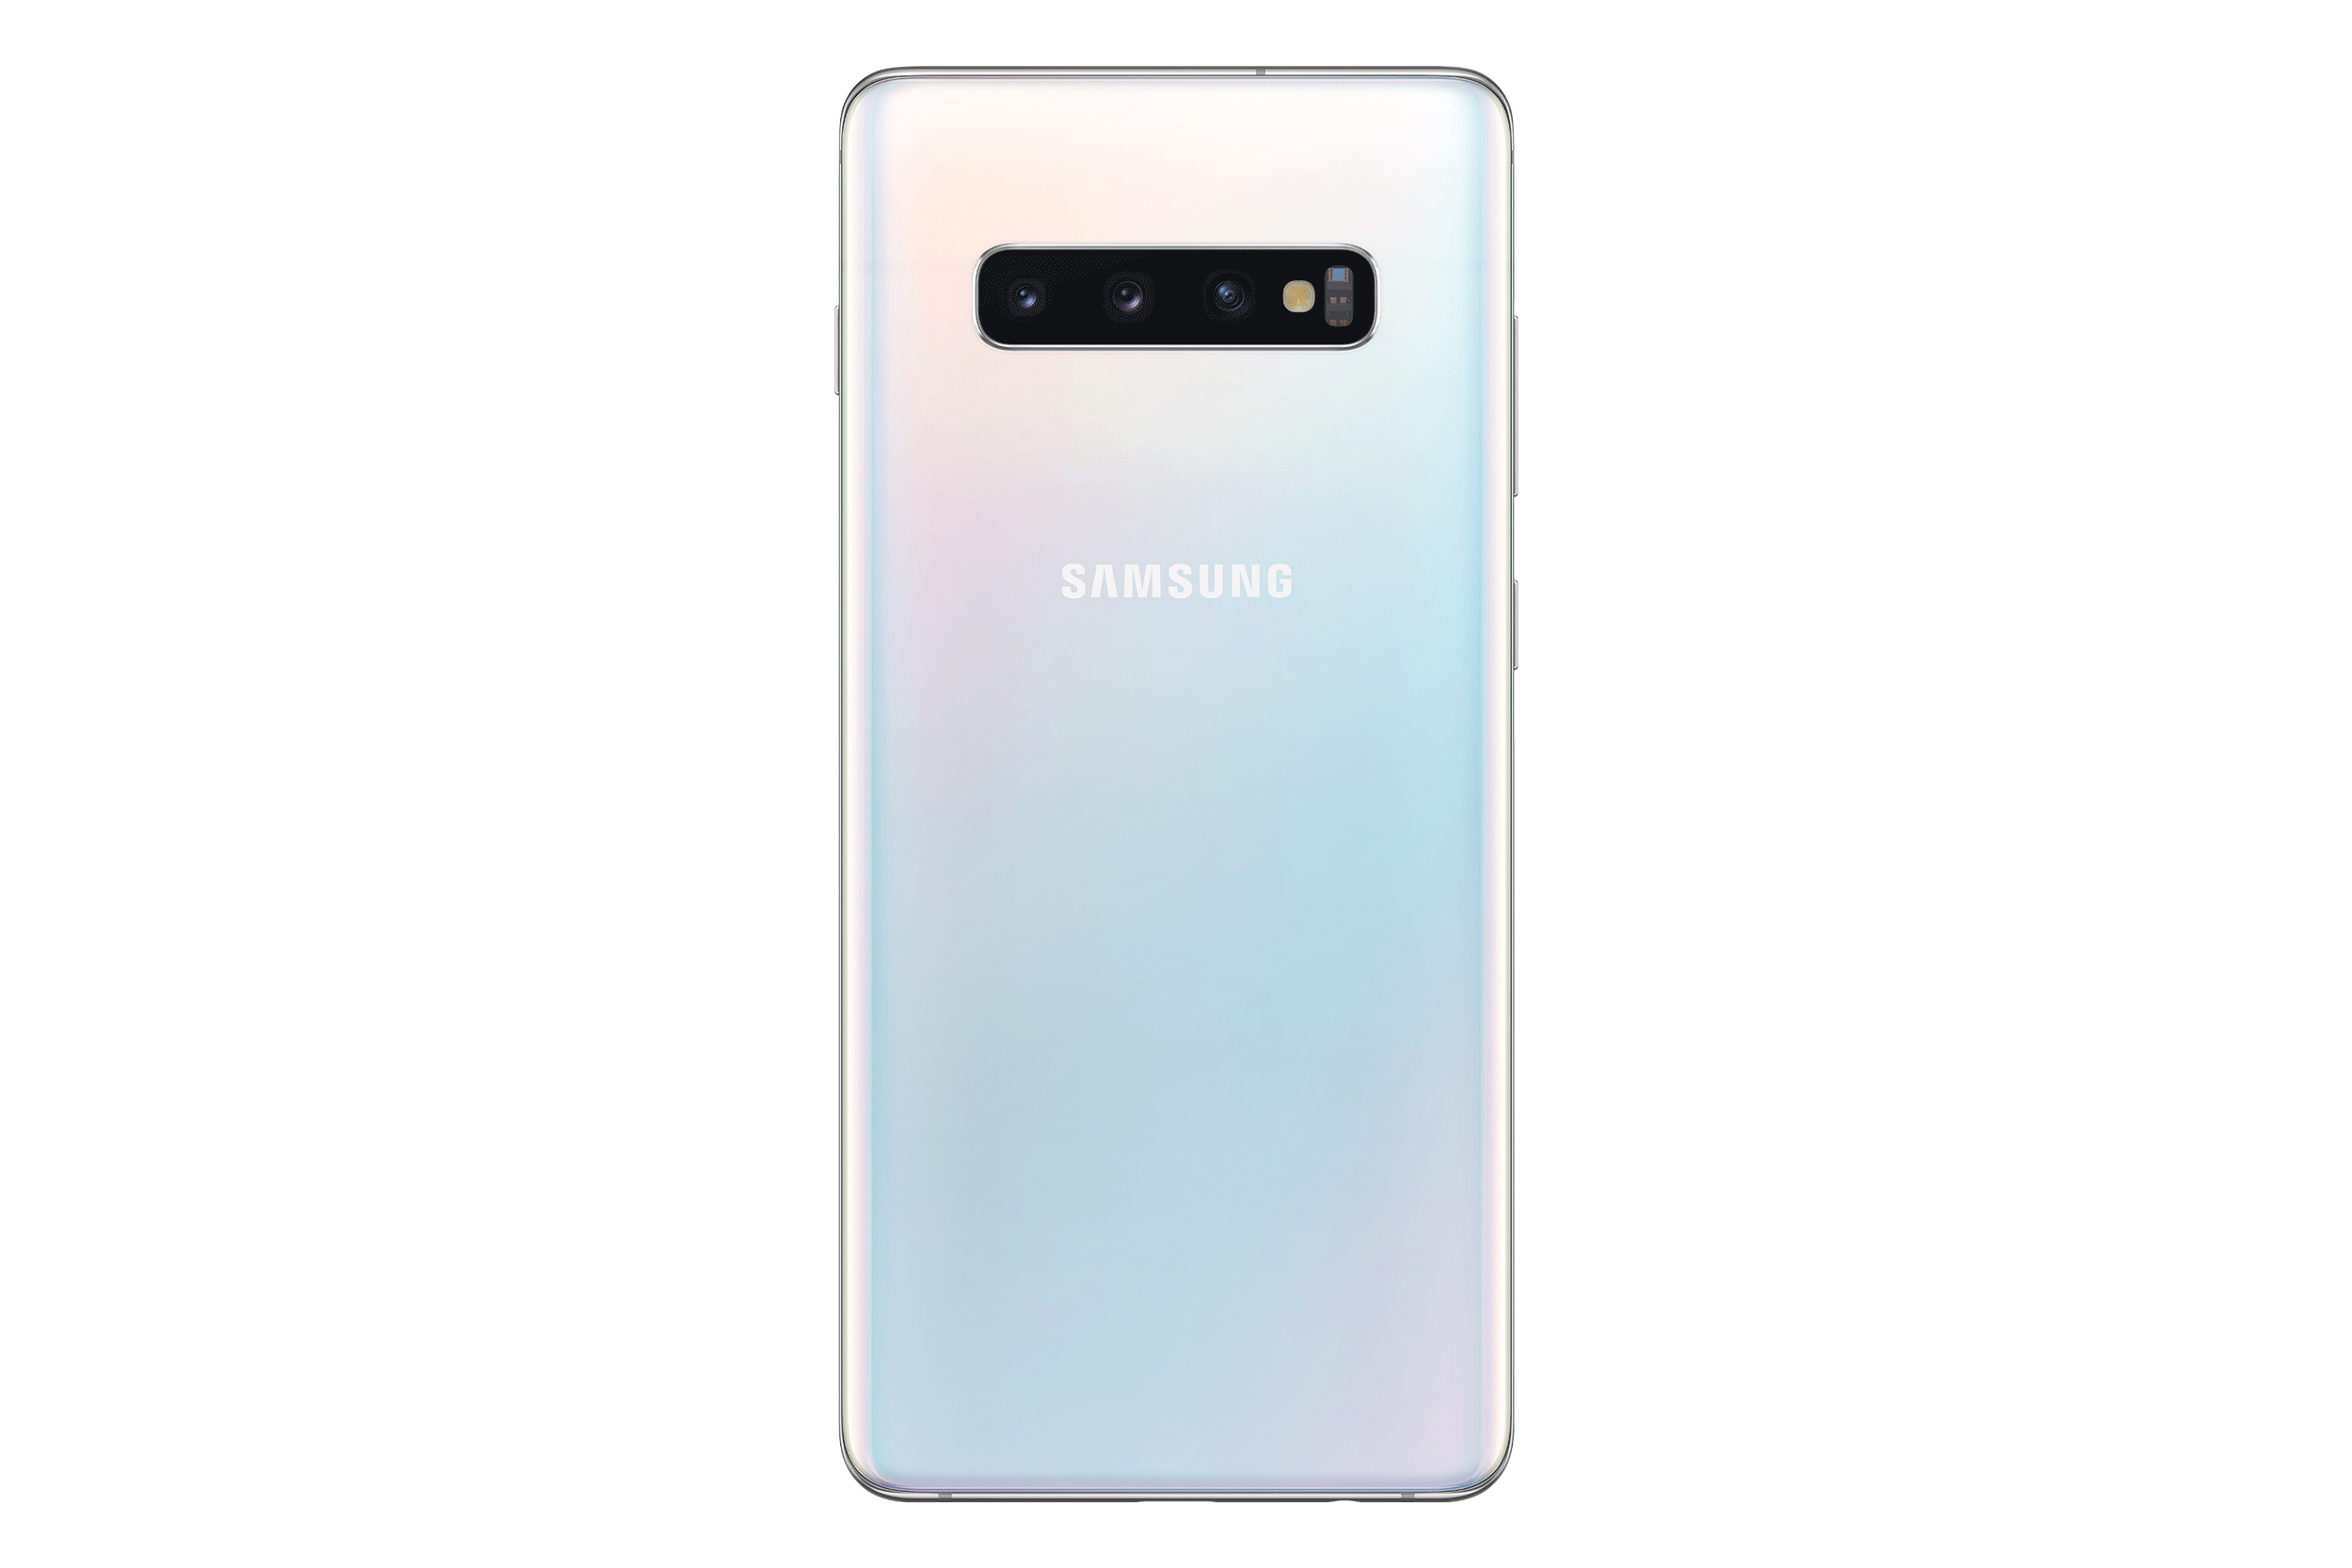 Samsung Galaxy S10+ (Unlocked, Prism White) - SM-G975